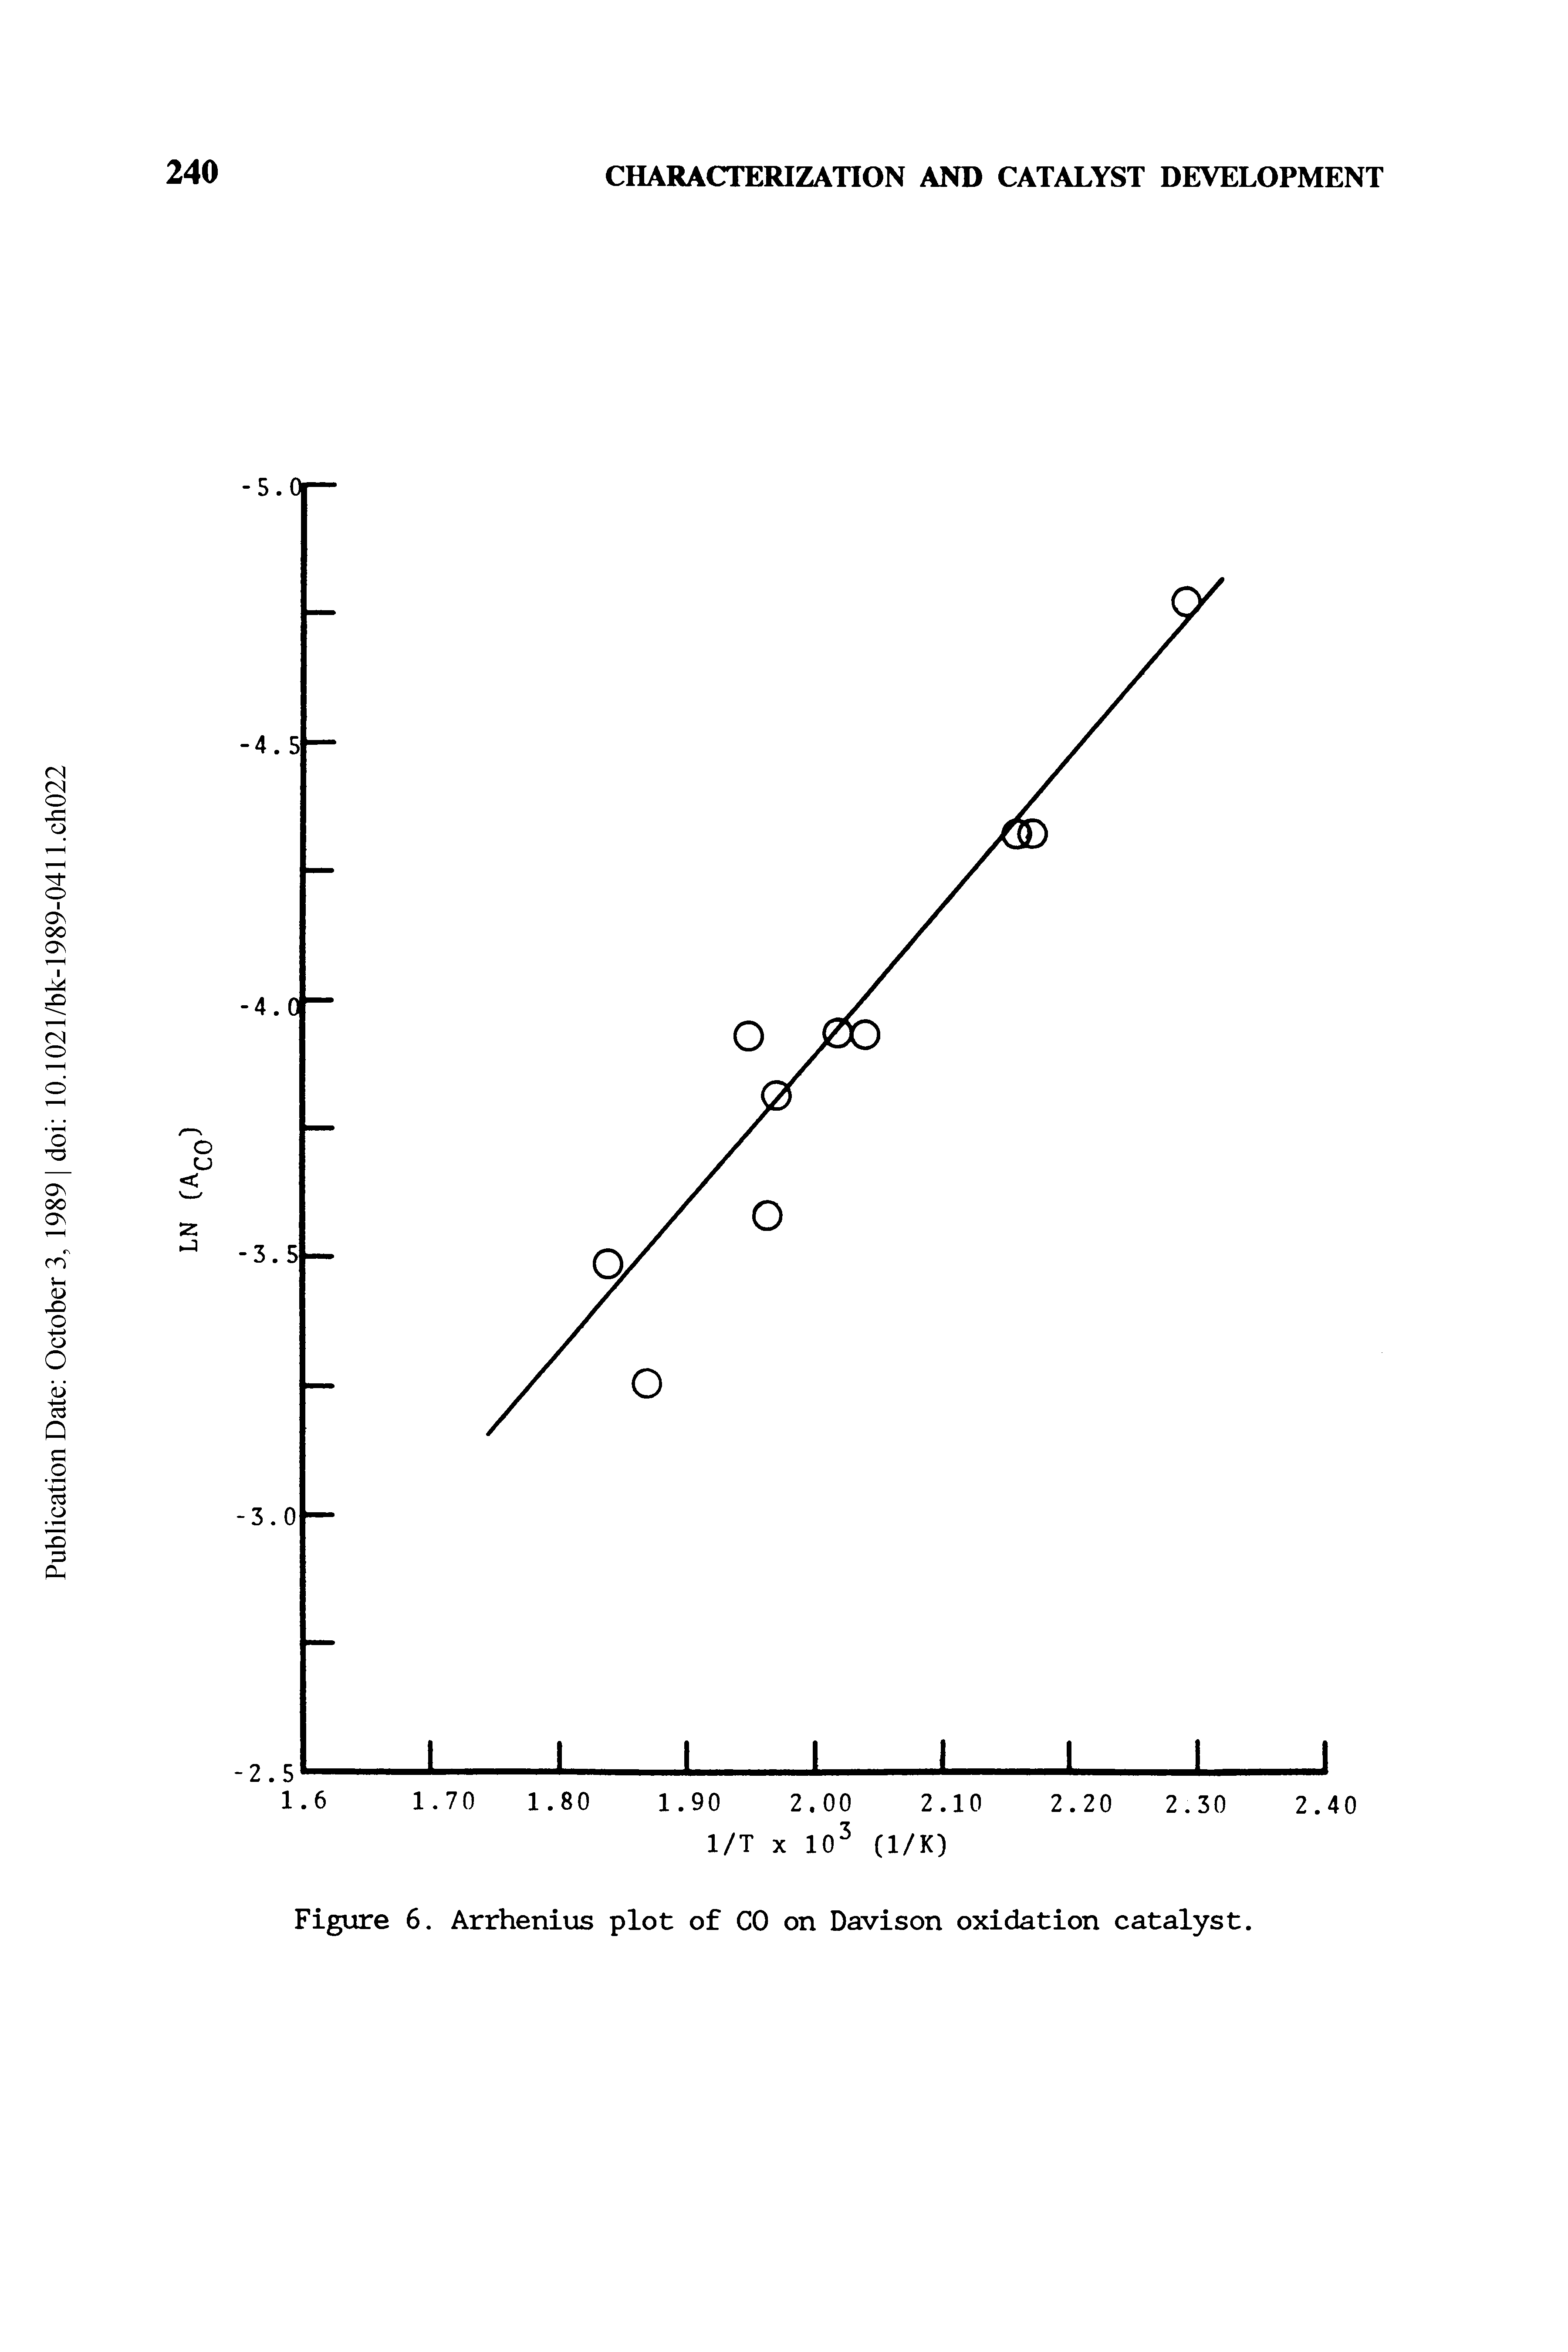 Figure 6. Arrhenius plot of CO on Davison oxidation catalyst.